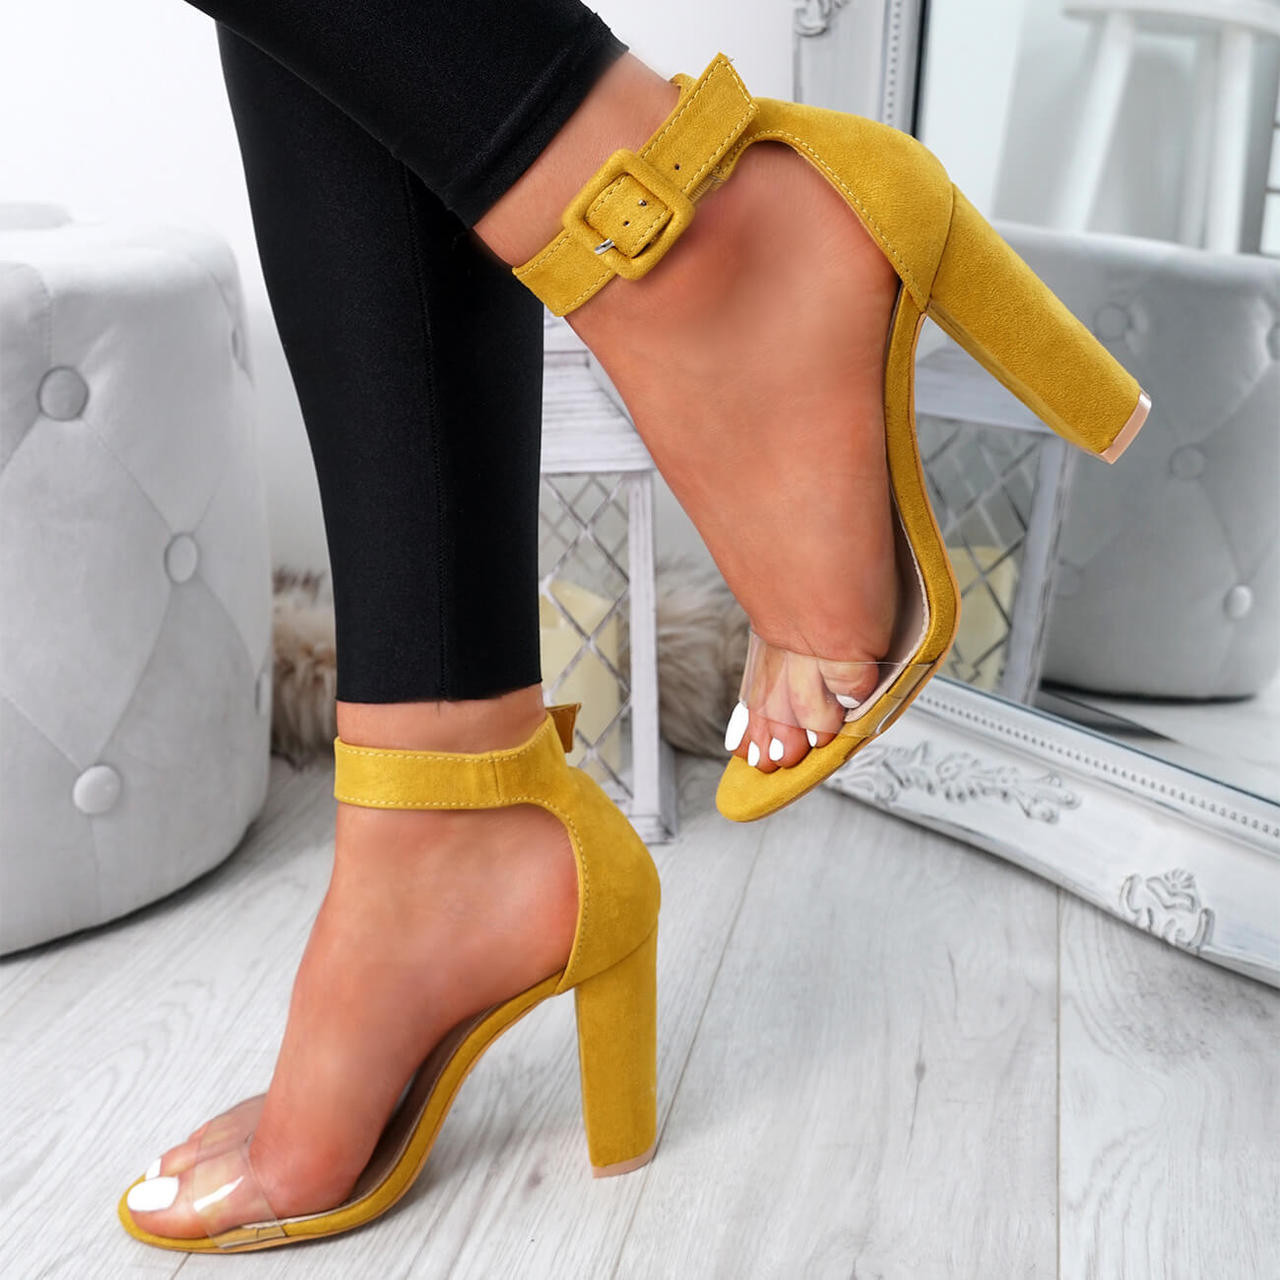 womens high heel sandals uk